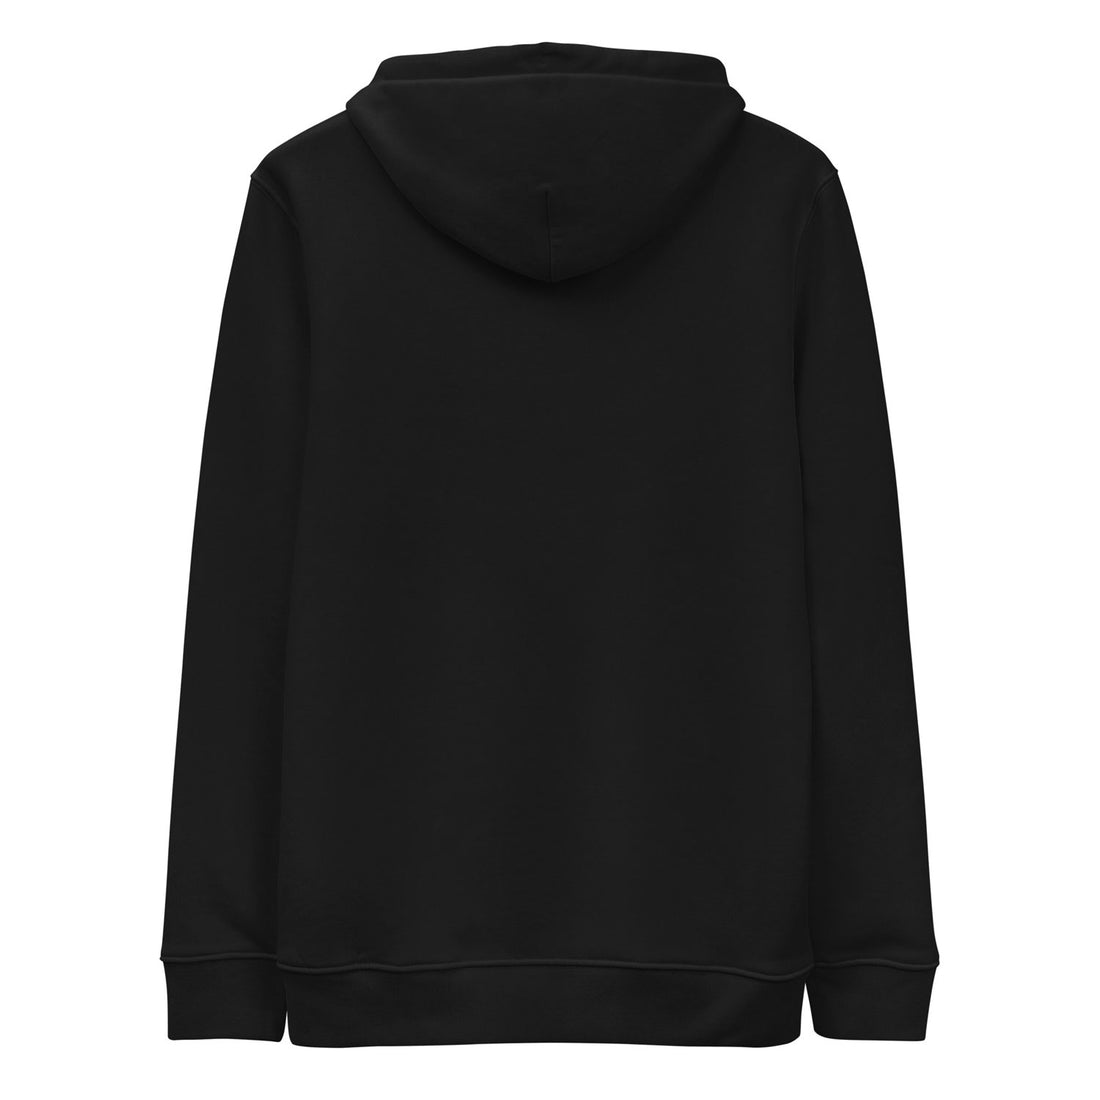 polkadot graphic hoodie black